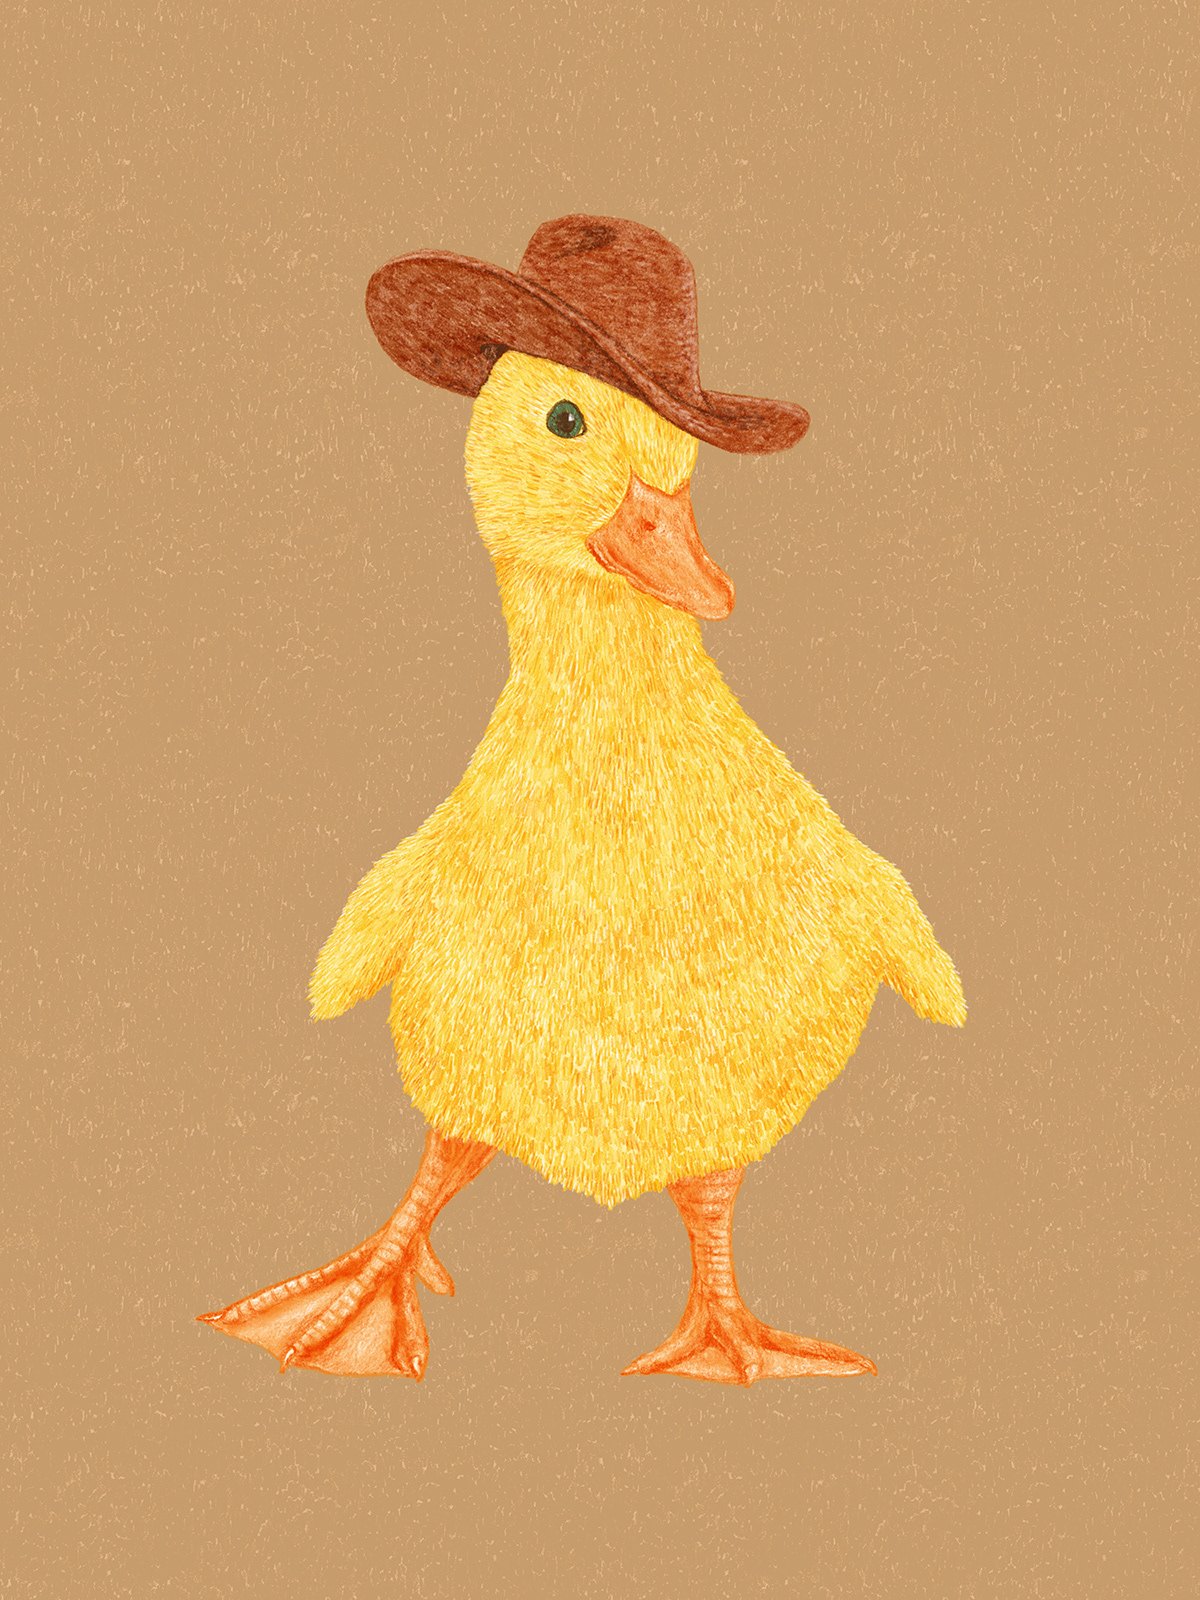 duck cute cowgirl stetson hat cowboy western wild west Retro duckling